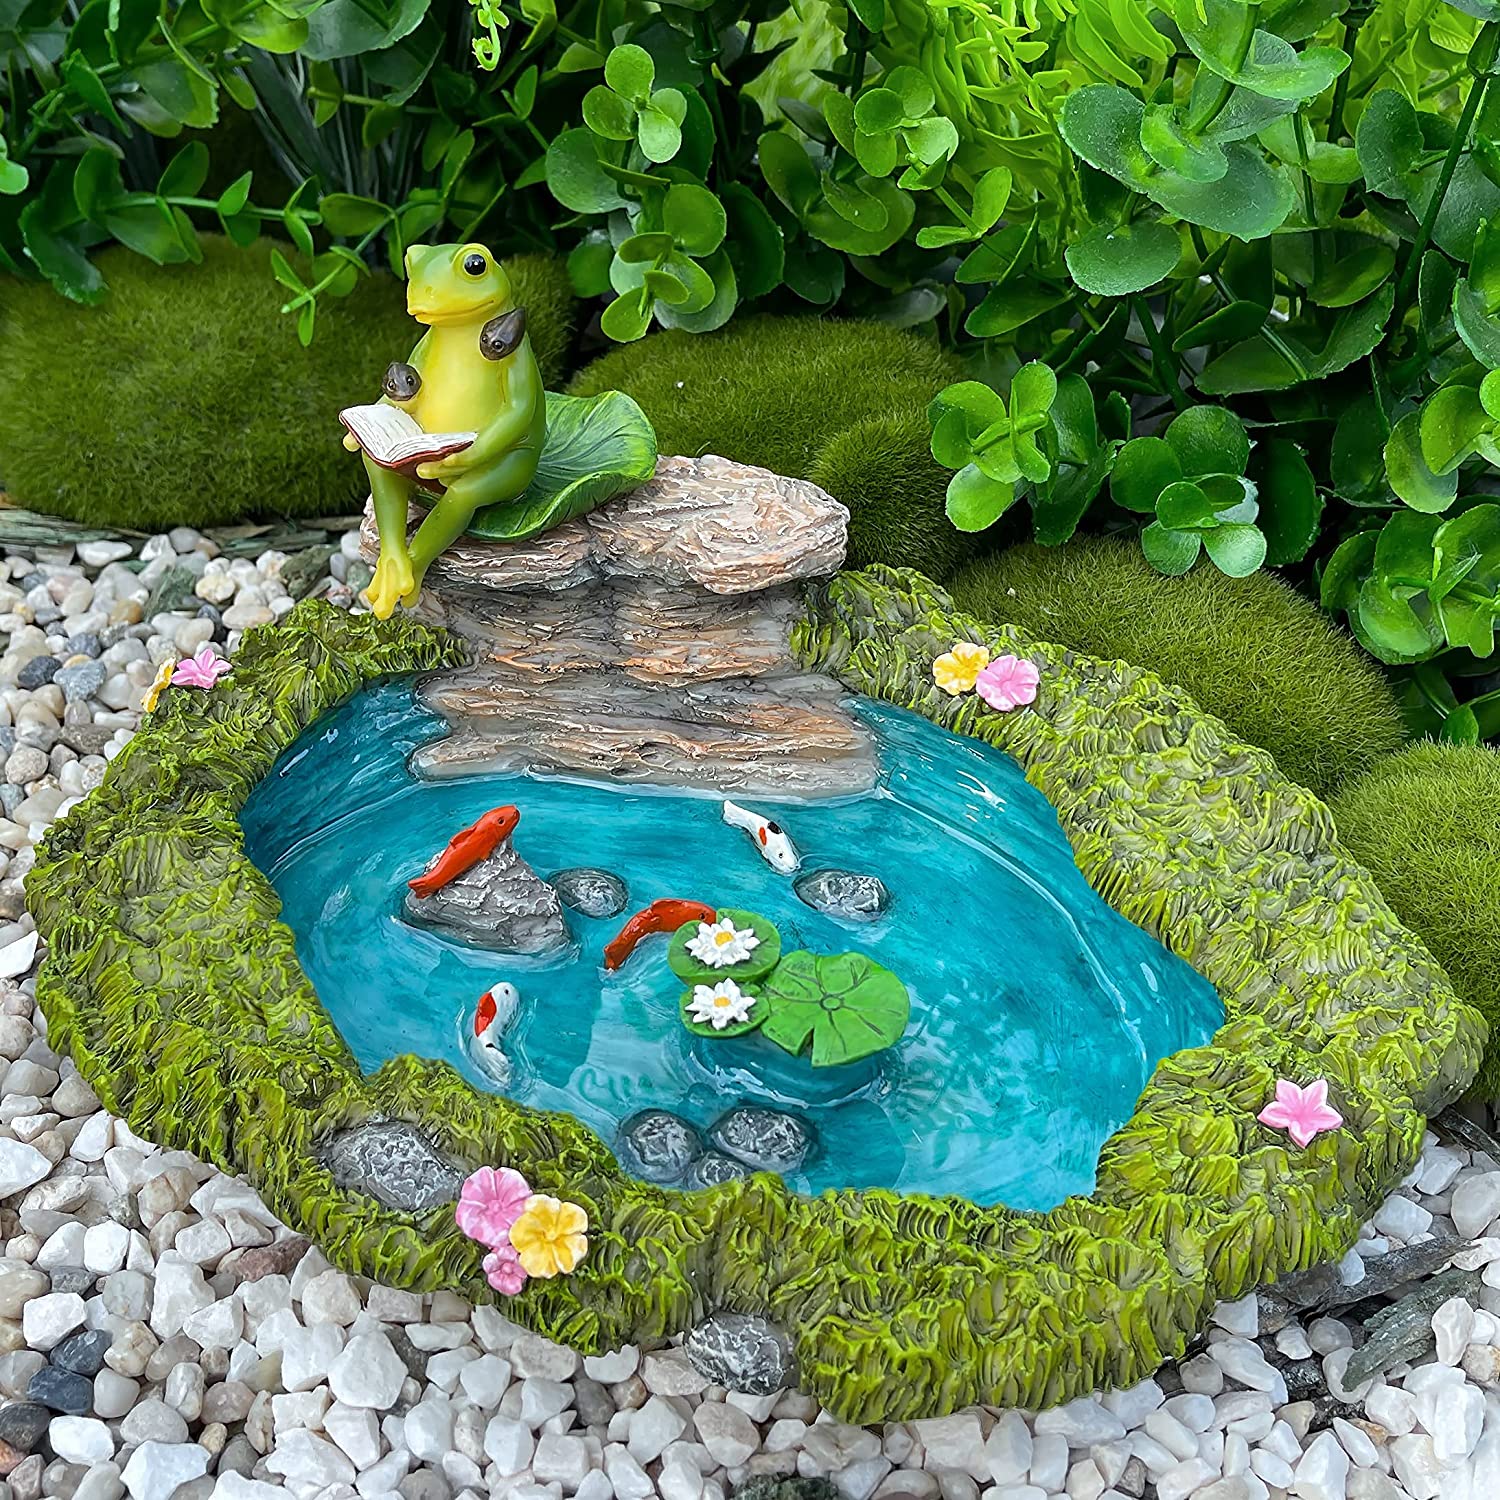 Fairy Garden Fish Pond Kit - Miniature Pond with Frog Figurine - 2